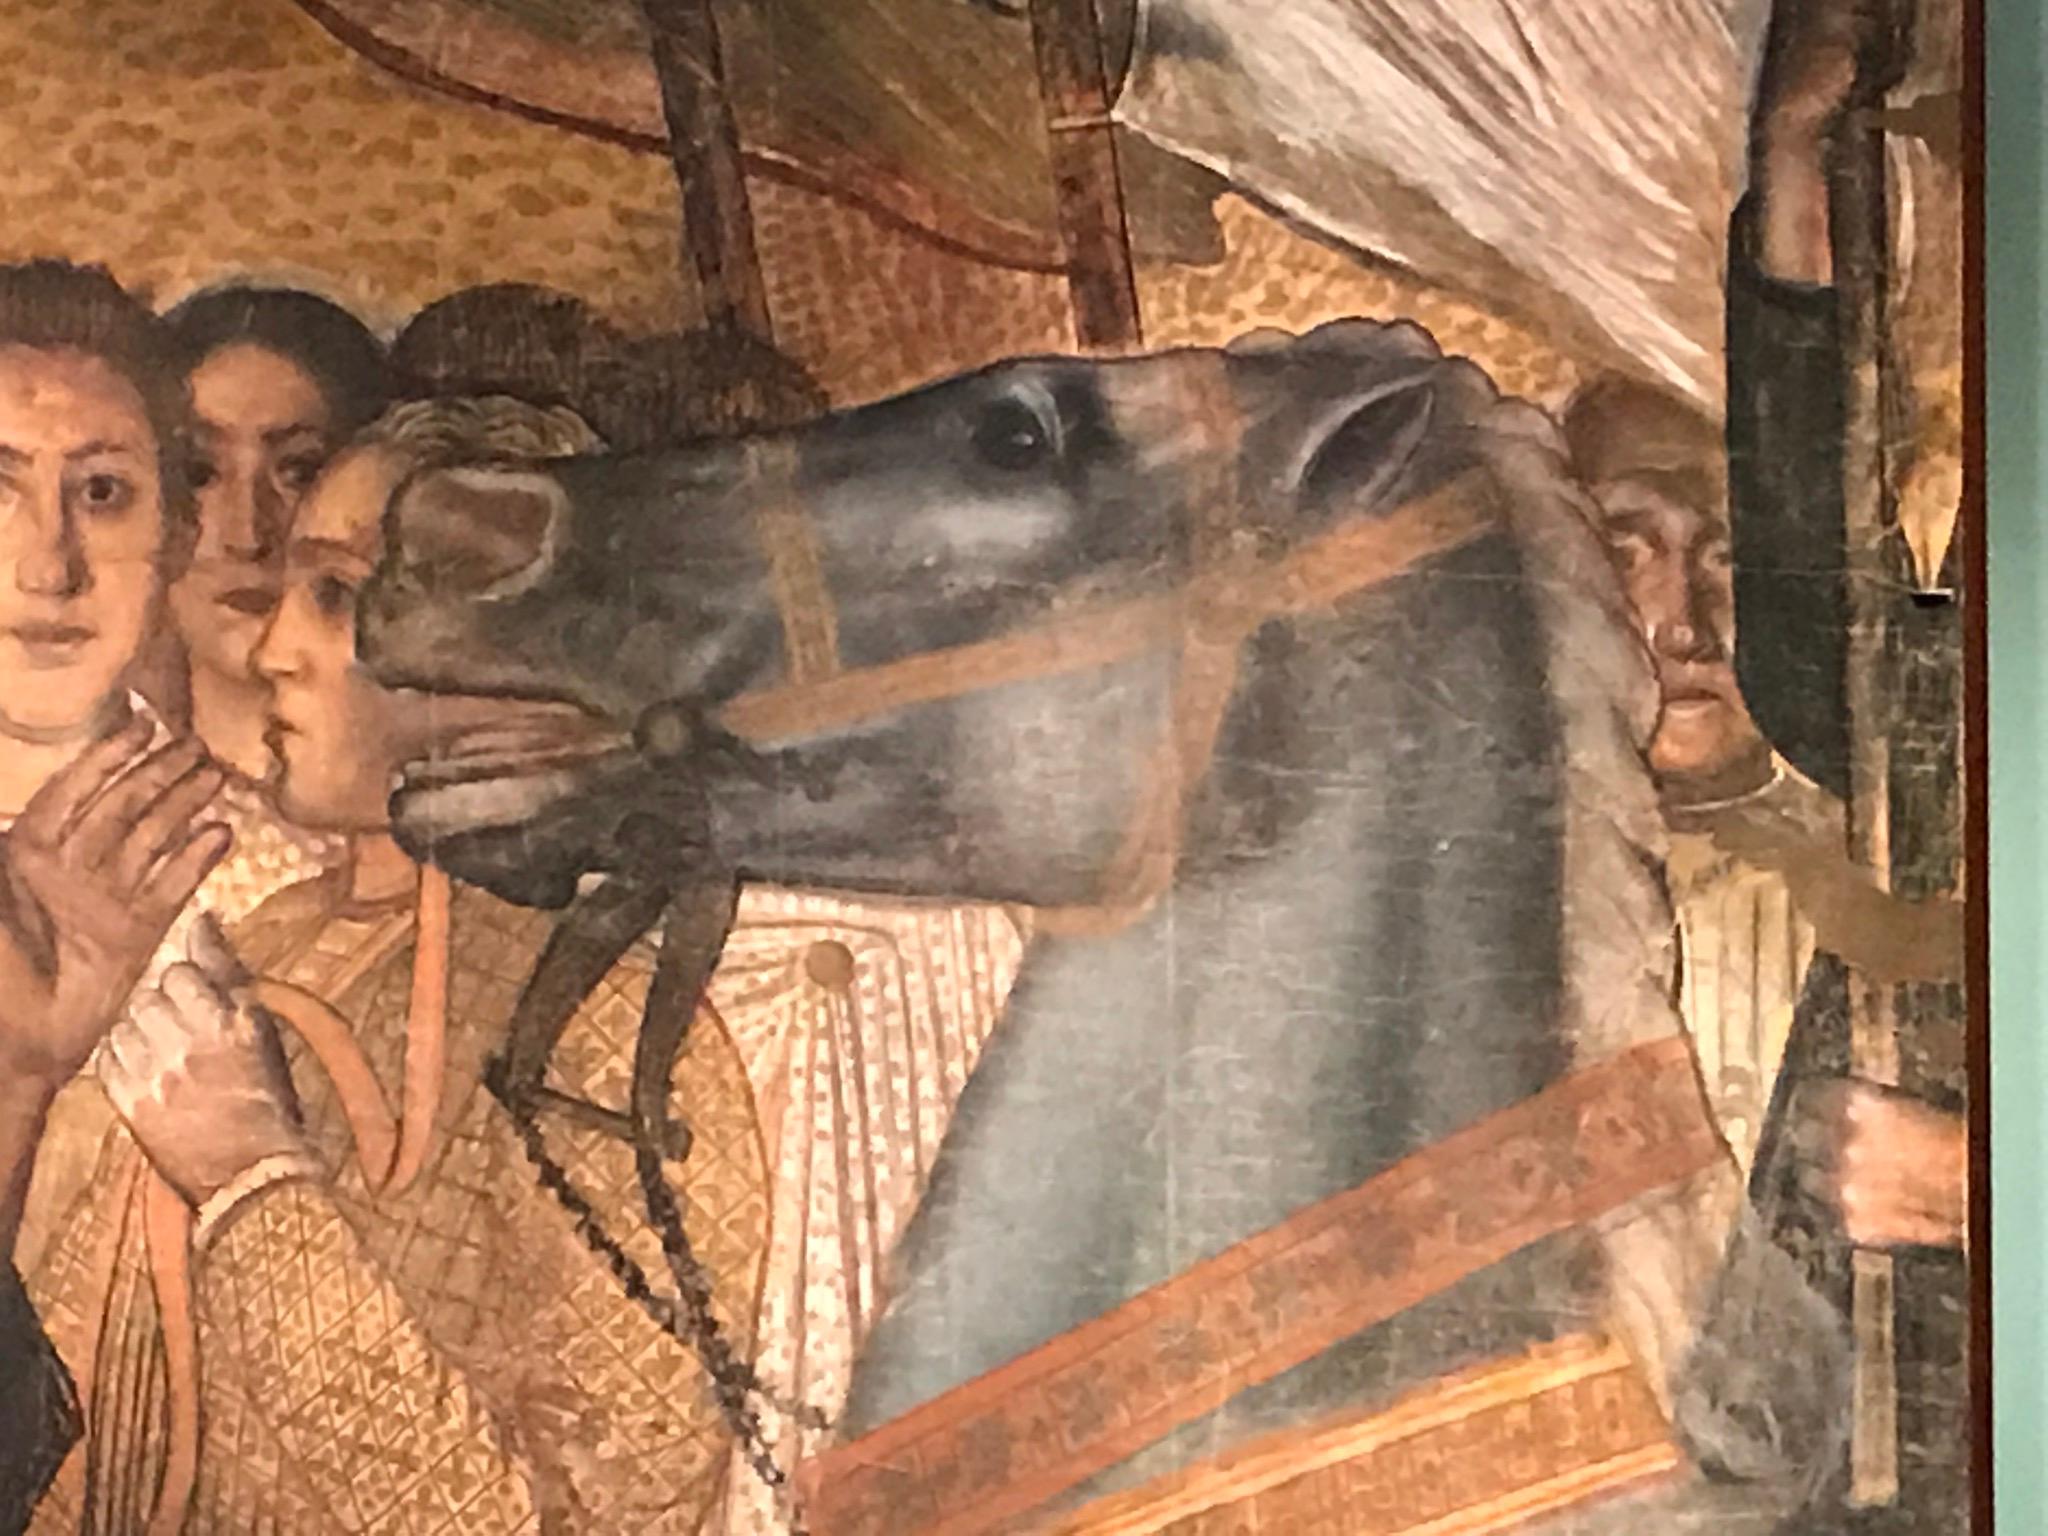 Cavallo, by Ferruccio Ferrazzi, Religious, Painting,Horse, Vatican, Brown,Tan

“Cavallo” by Ferruccio Ferrazzi is a work lost during World War II and restored by the Mosaic School of Art at Vacan City. Circa 1940s.
Ferruccio Ferrazzi (15 March 1891